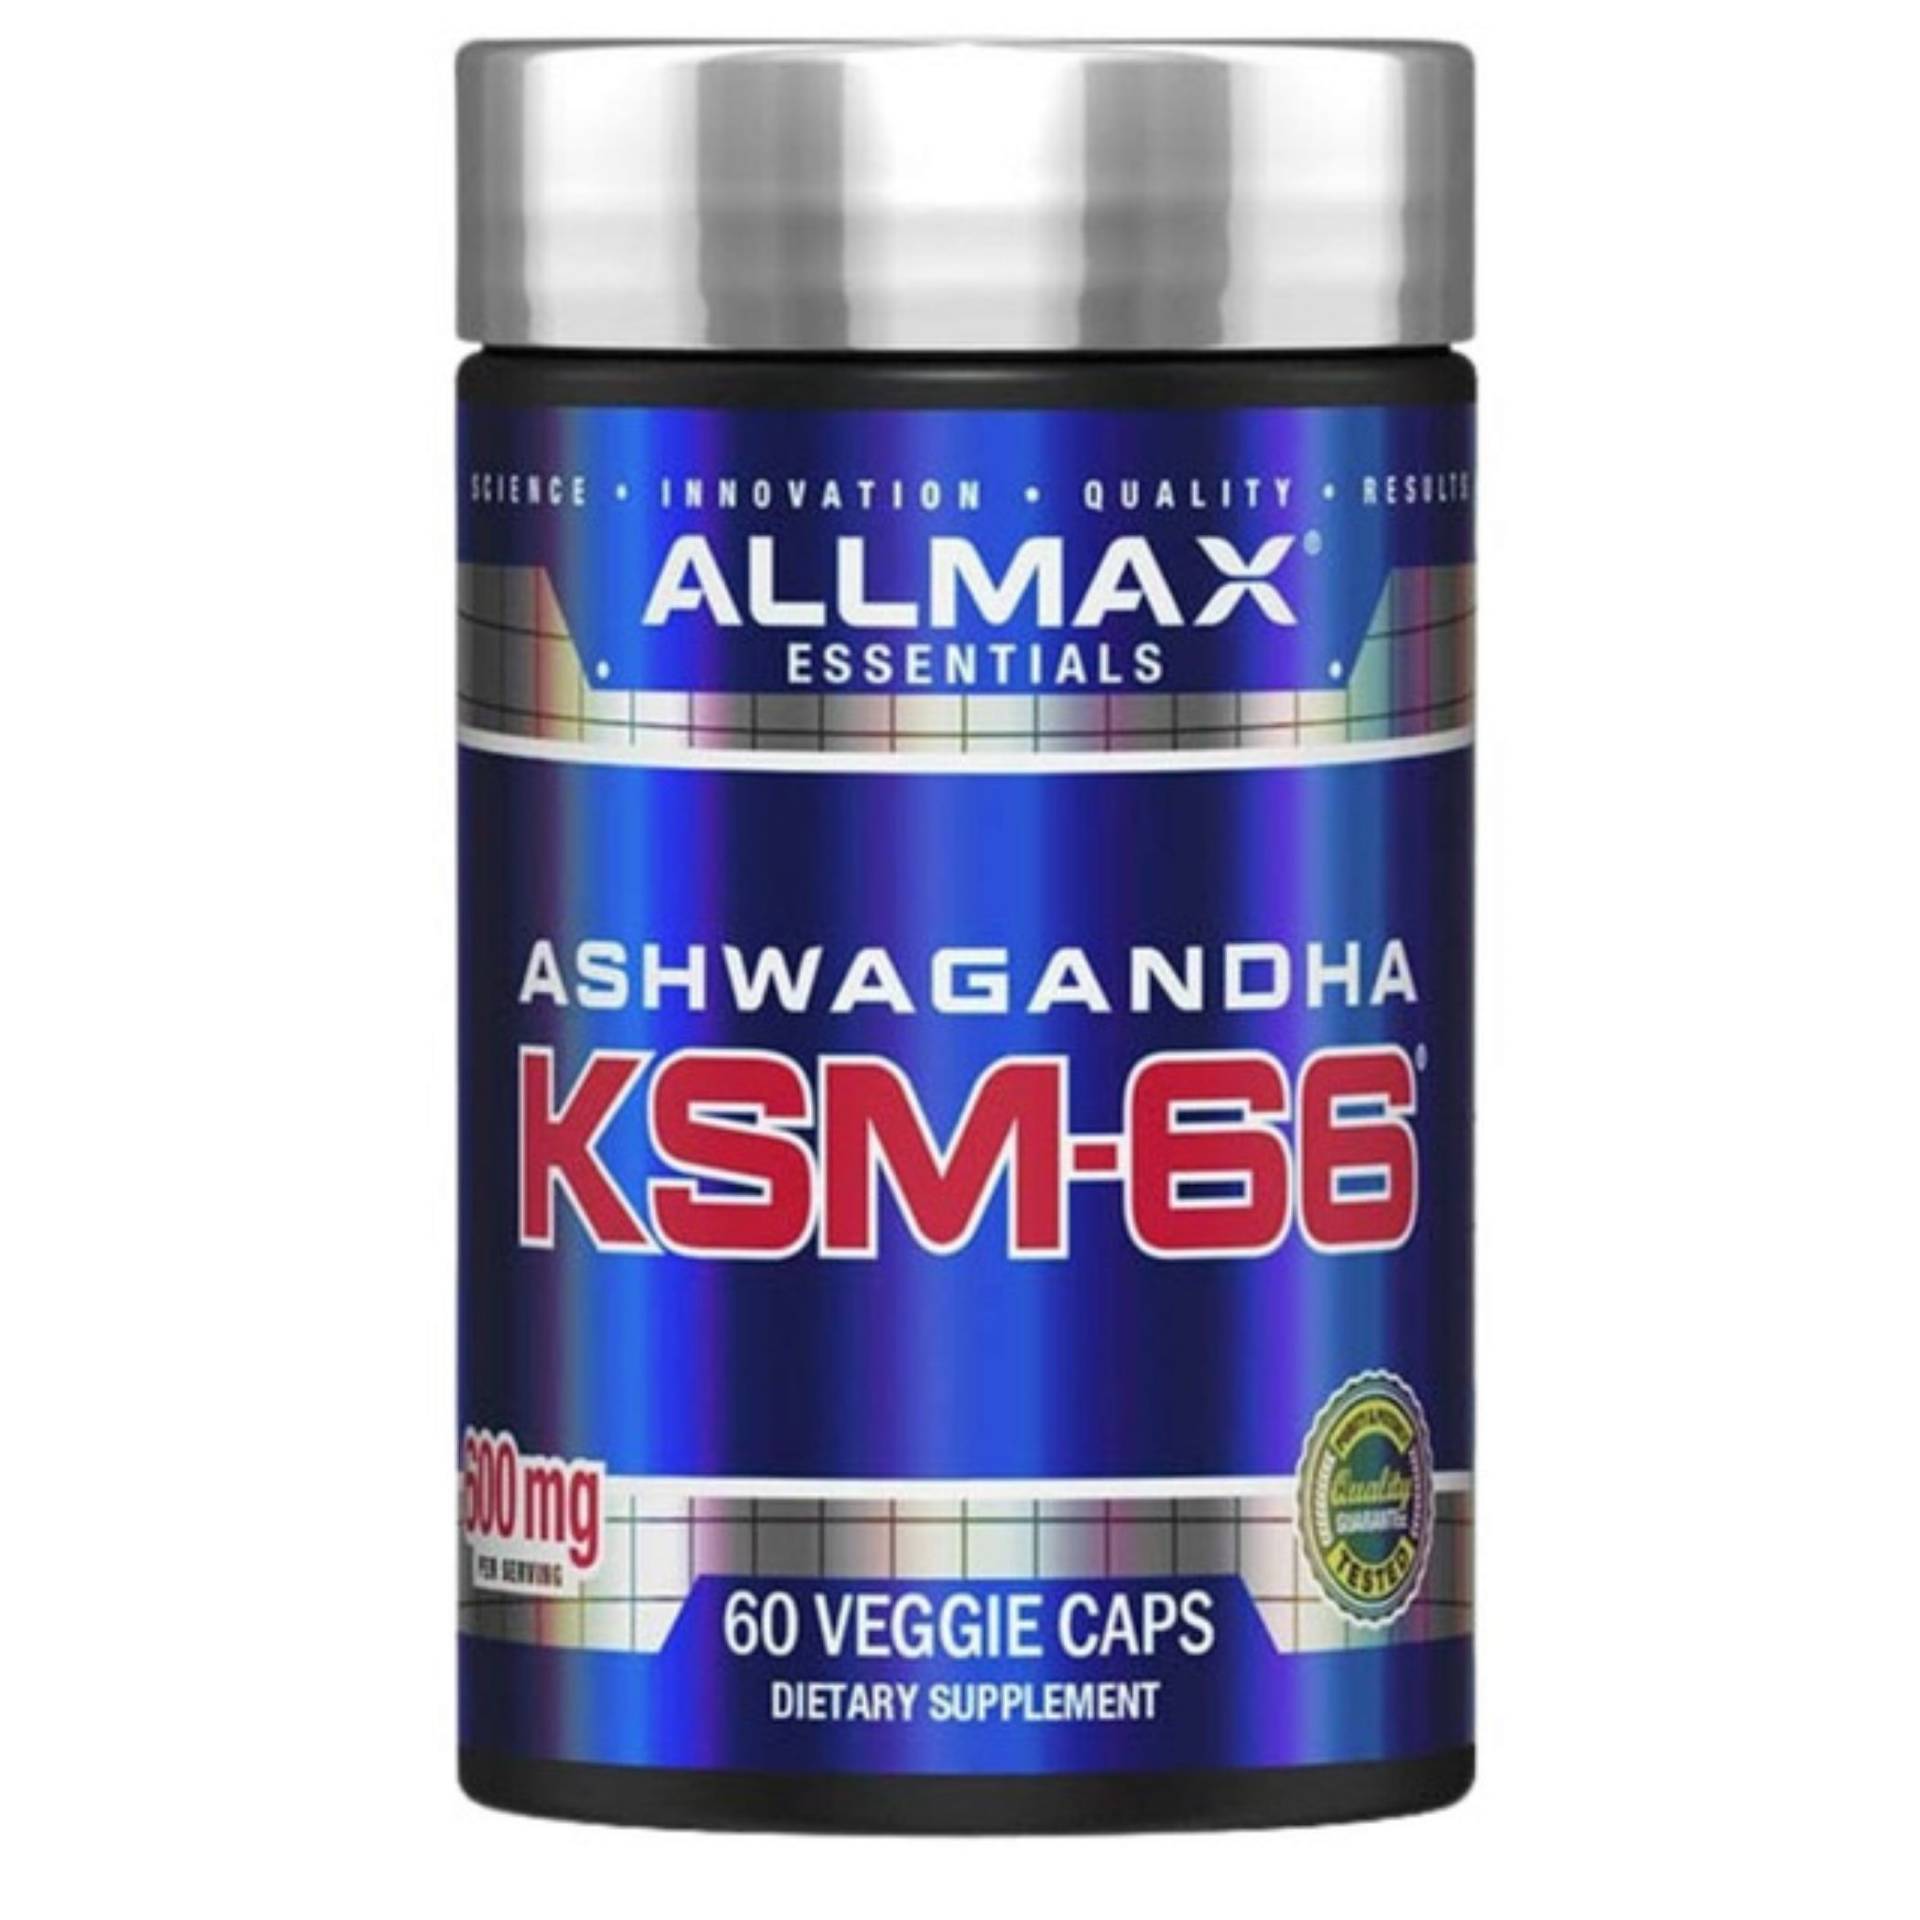 Allmax Ashwagandha KSM-66 Capsules - $17.99